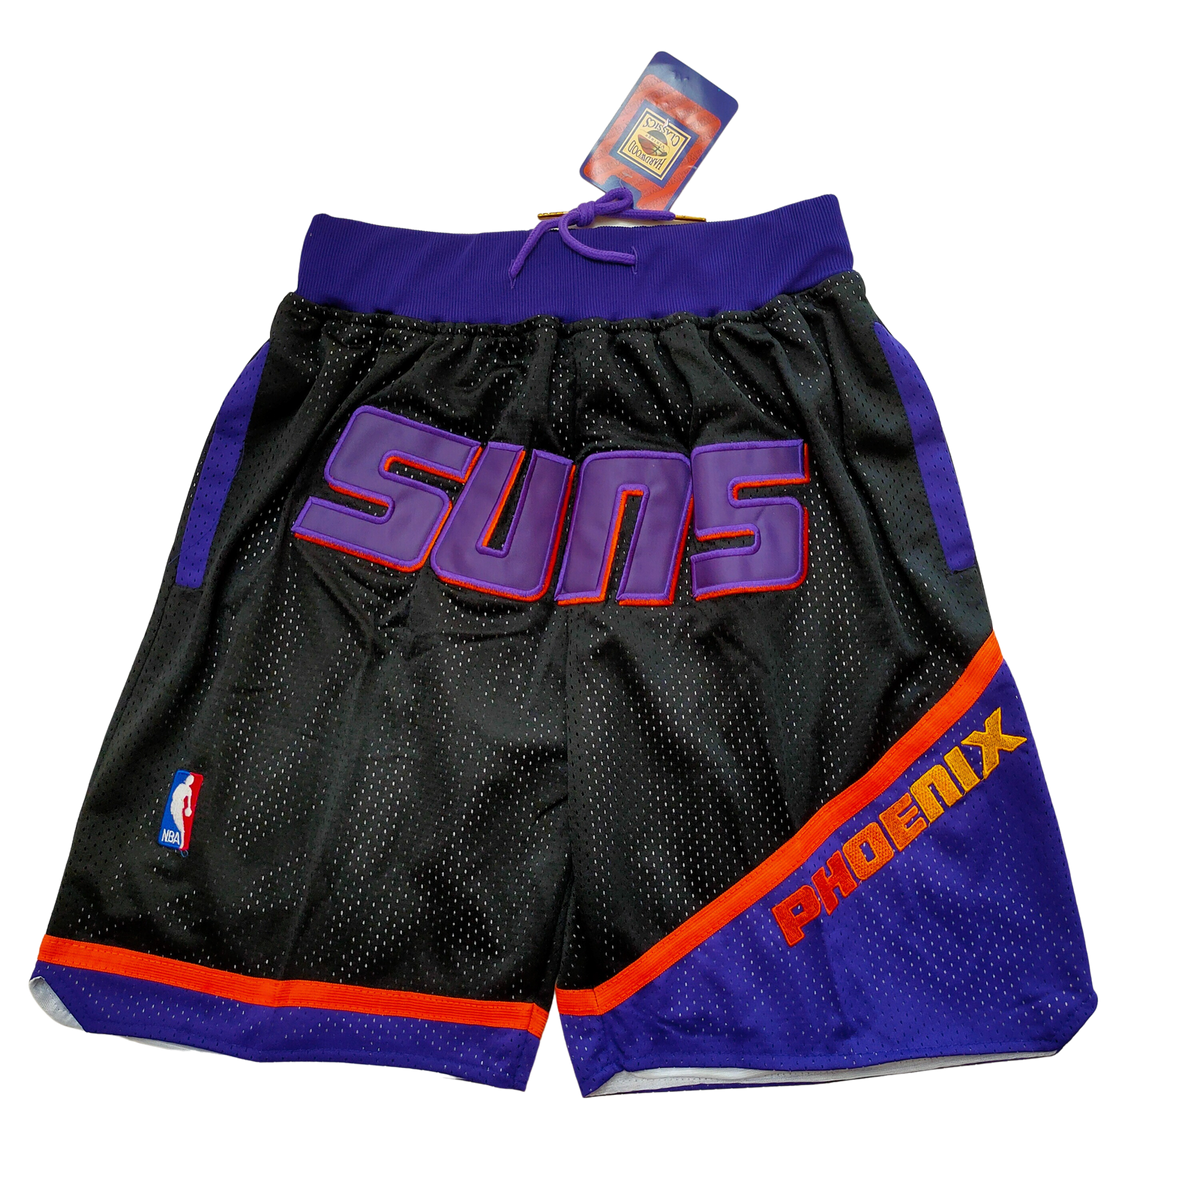 Buy Phoenix Suns Shorts online